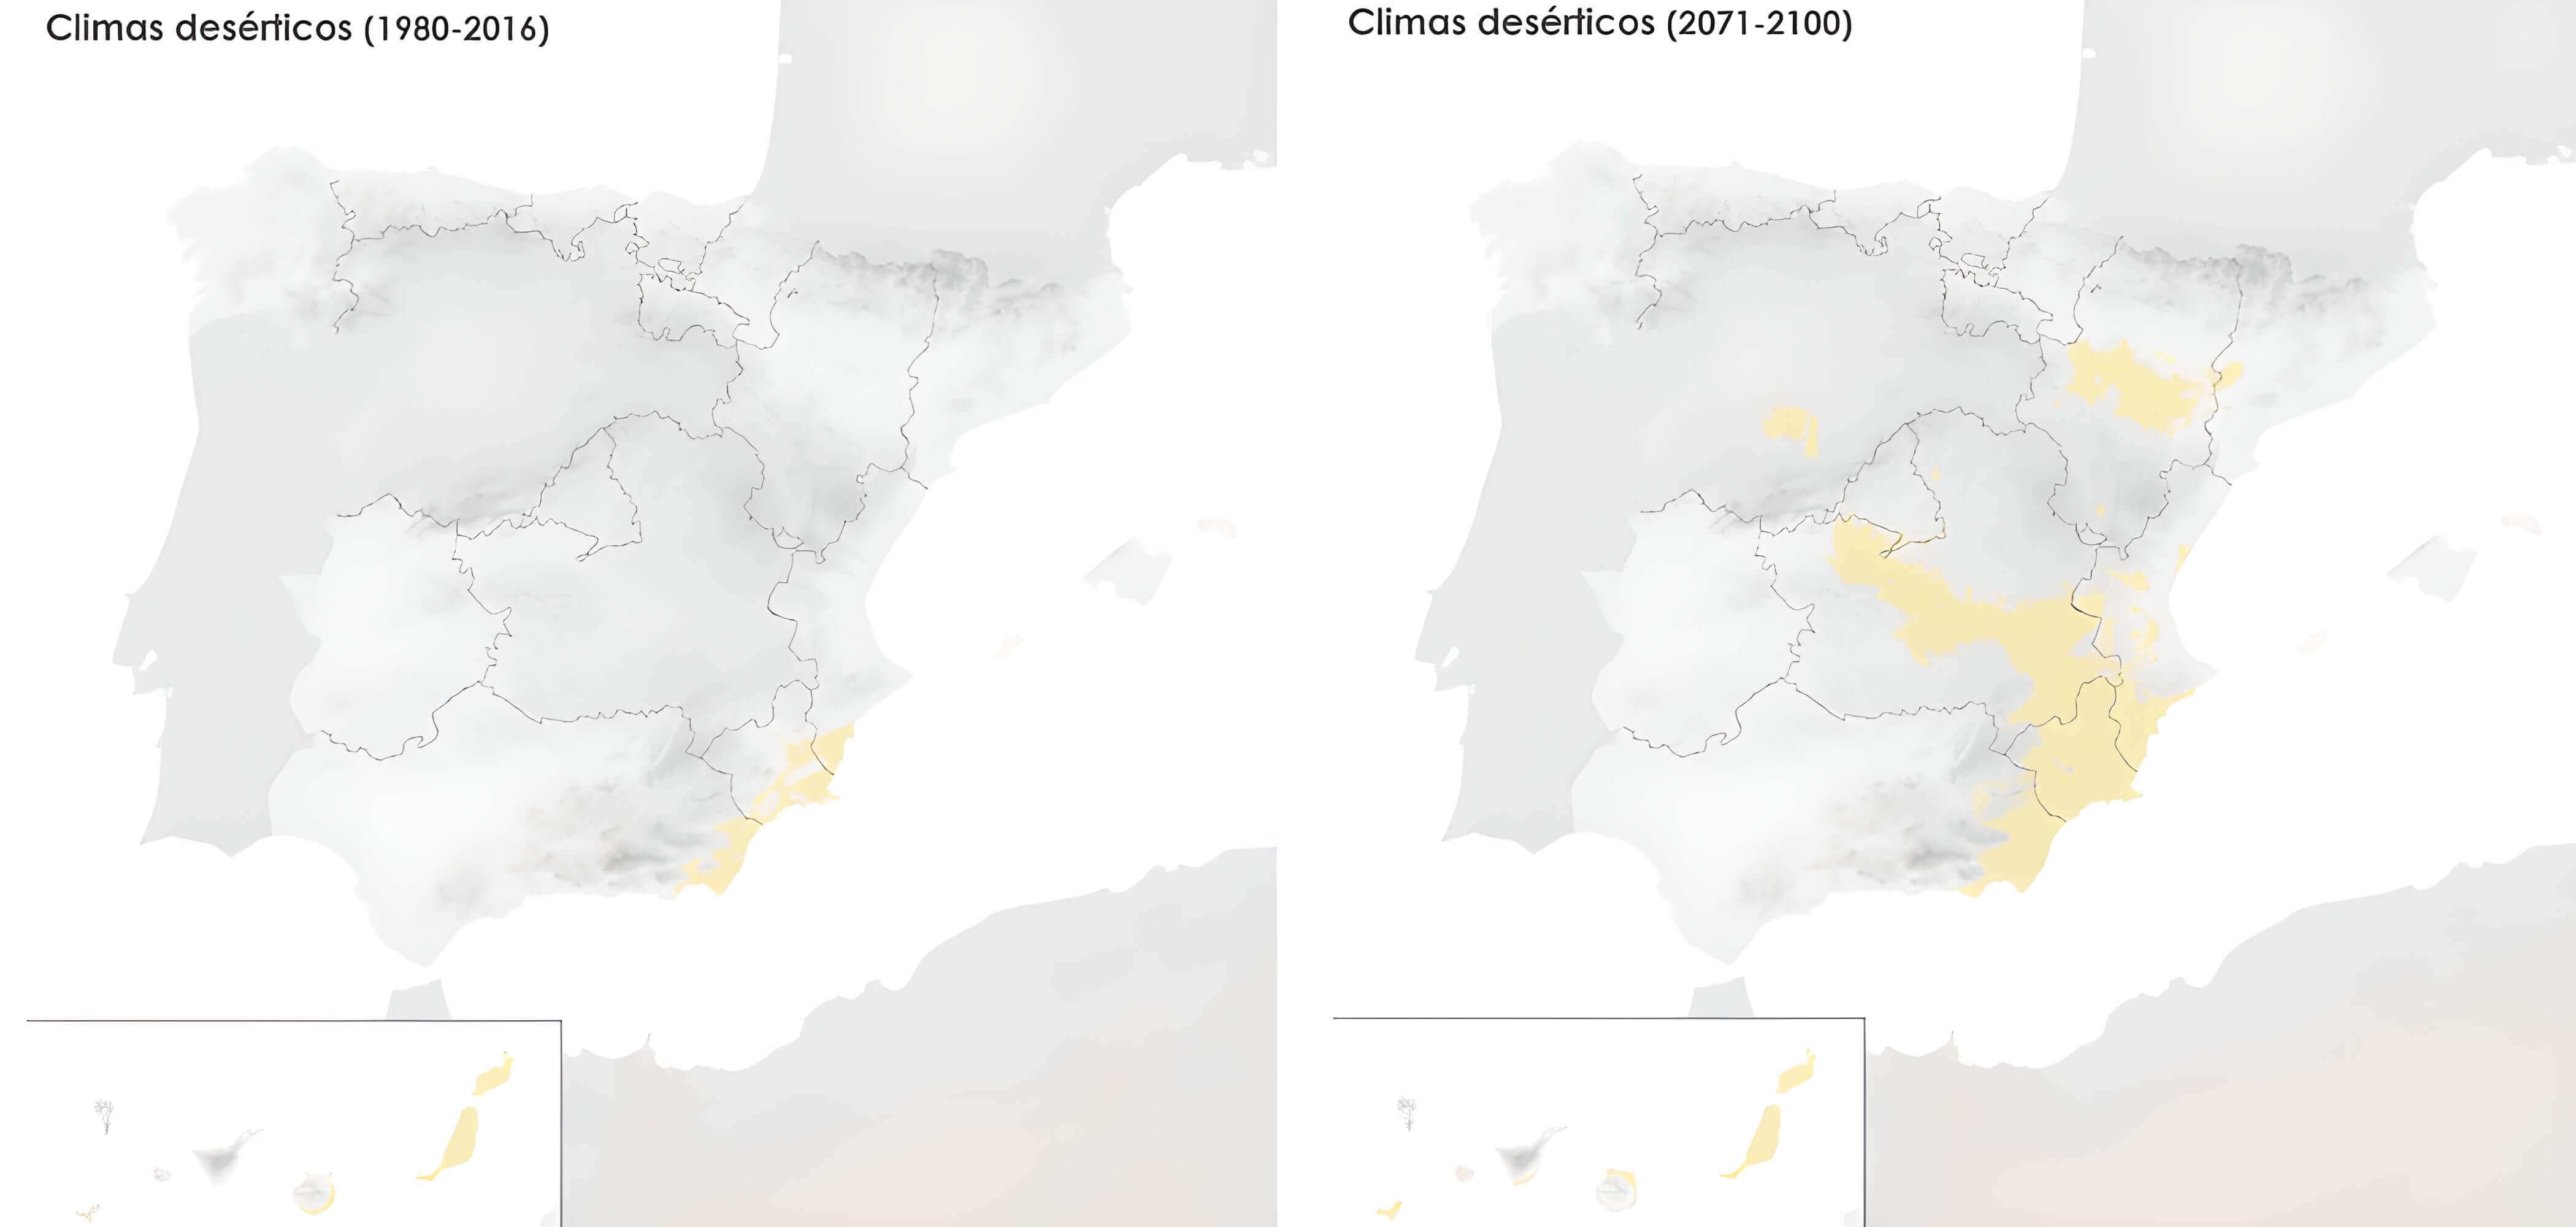 futuro del clima desértico en España